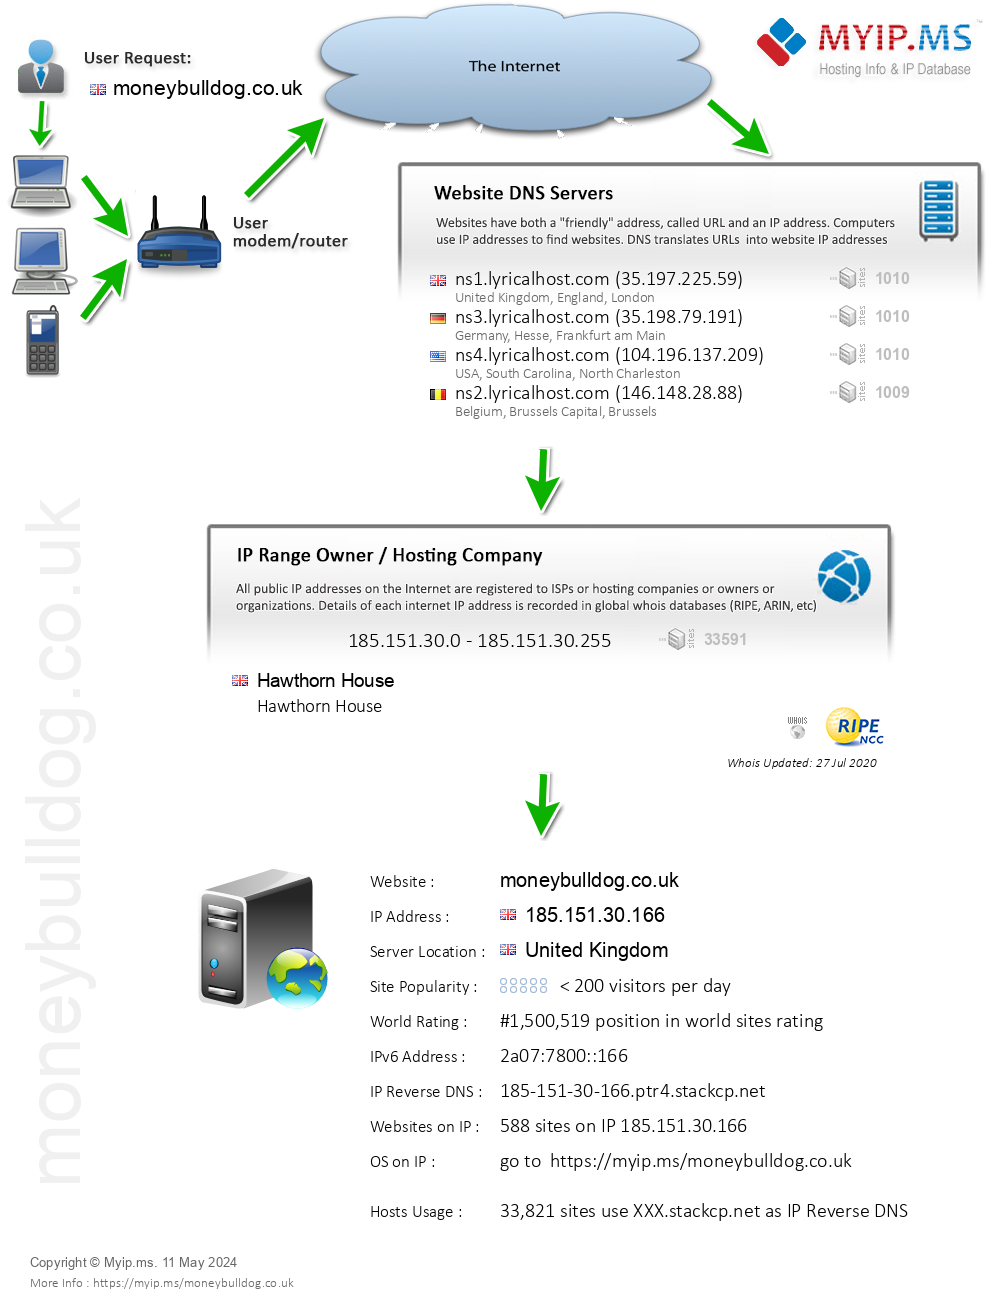 Moneybulldog.co.uk - Website Hosting Visual IP Diagram